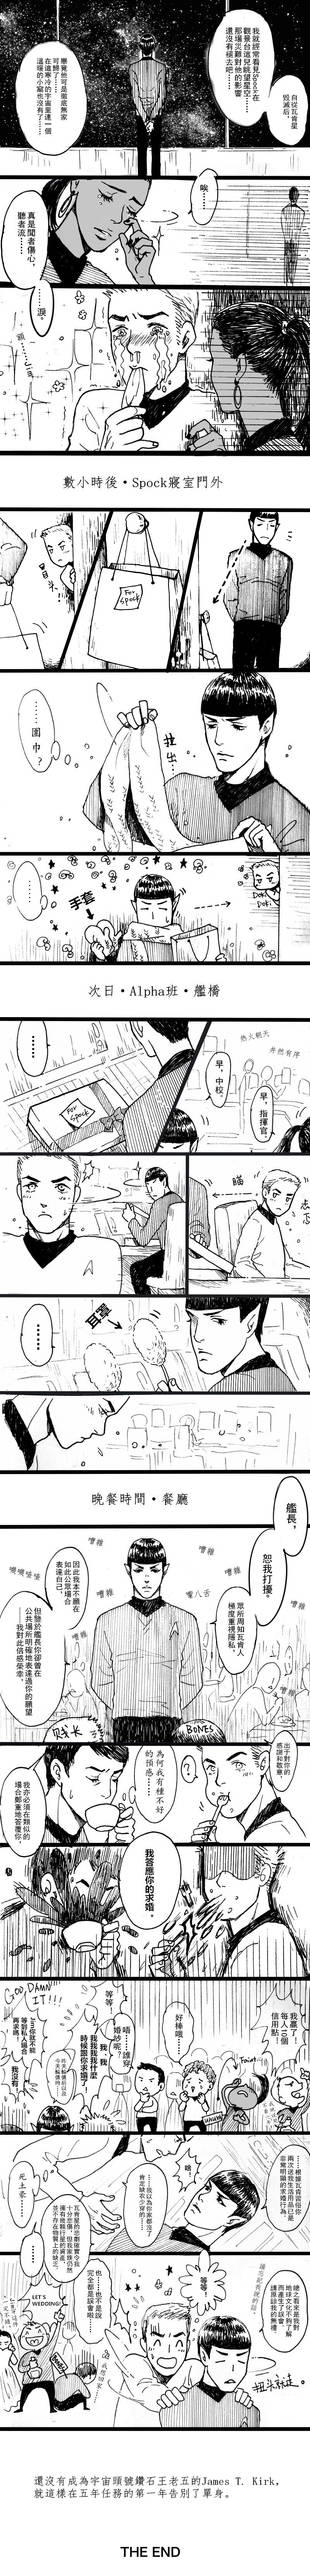 Reboot ST- Spirk comic- Vulcan Culture(Chinese)